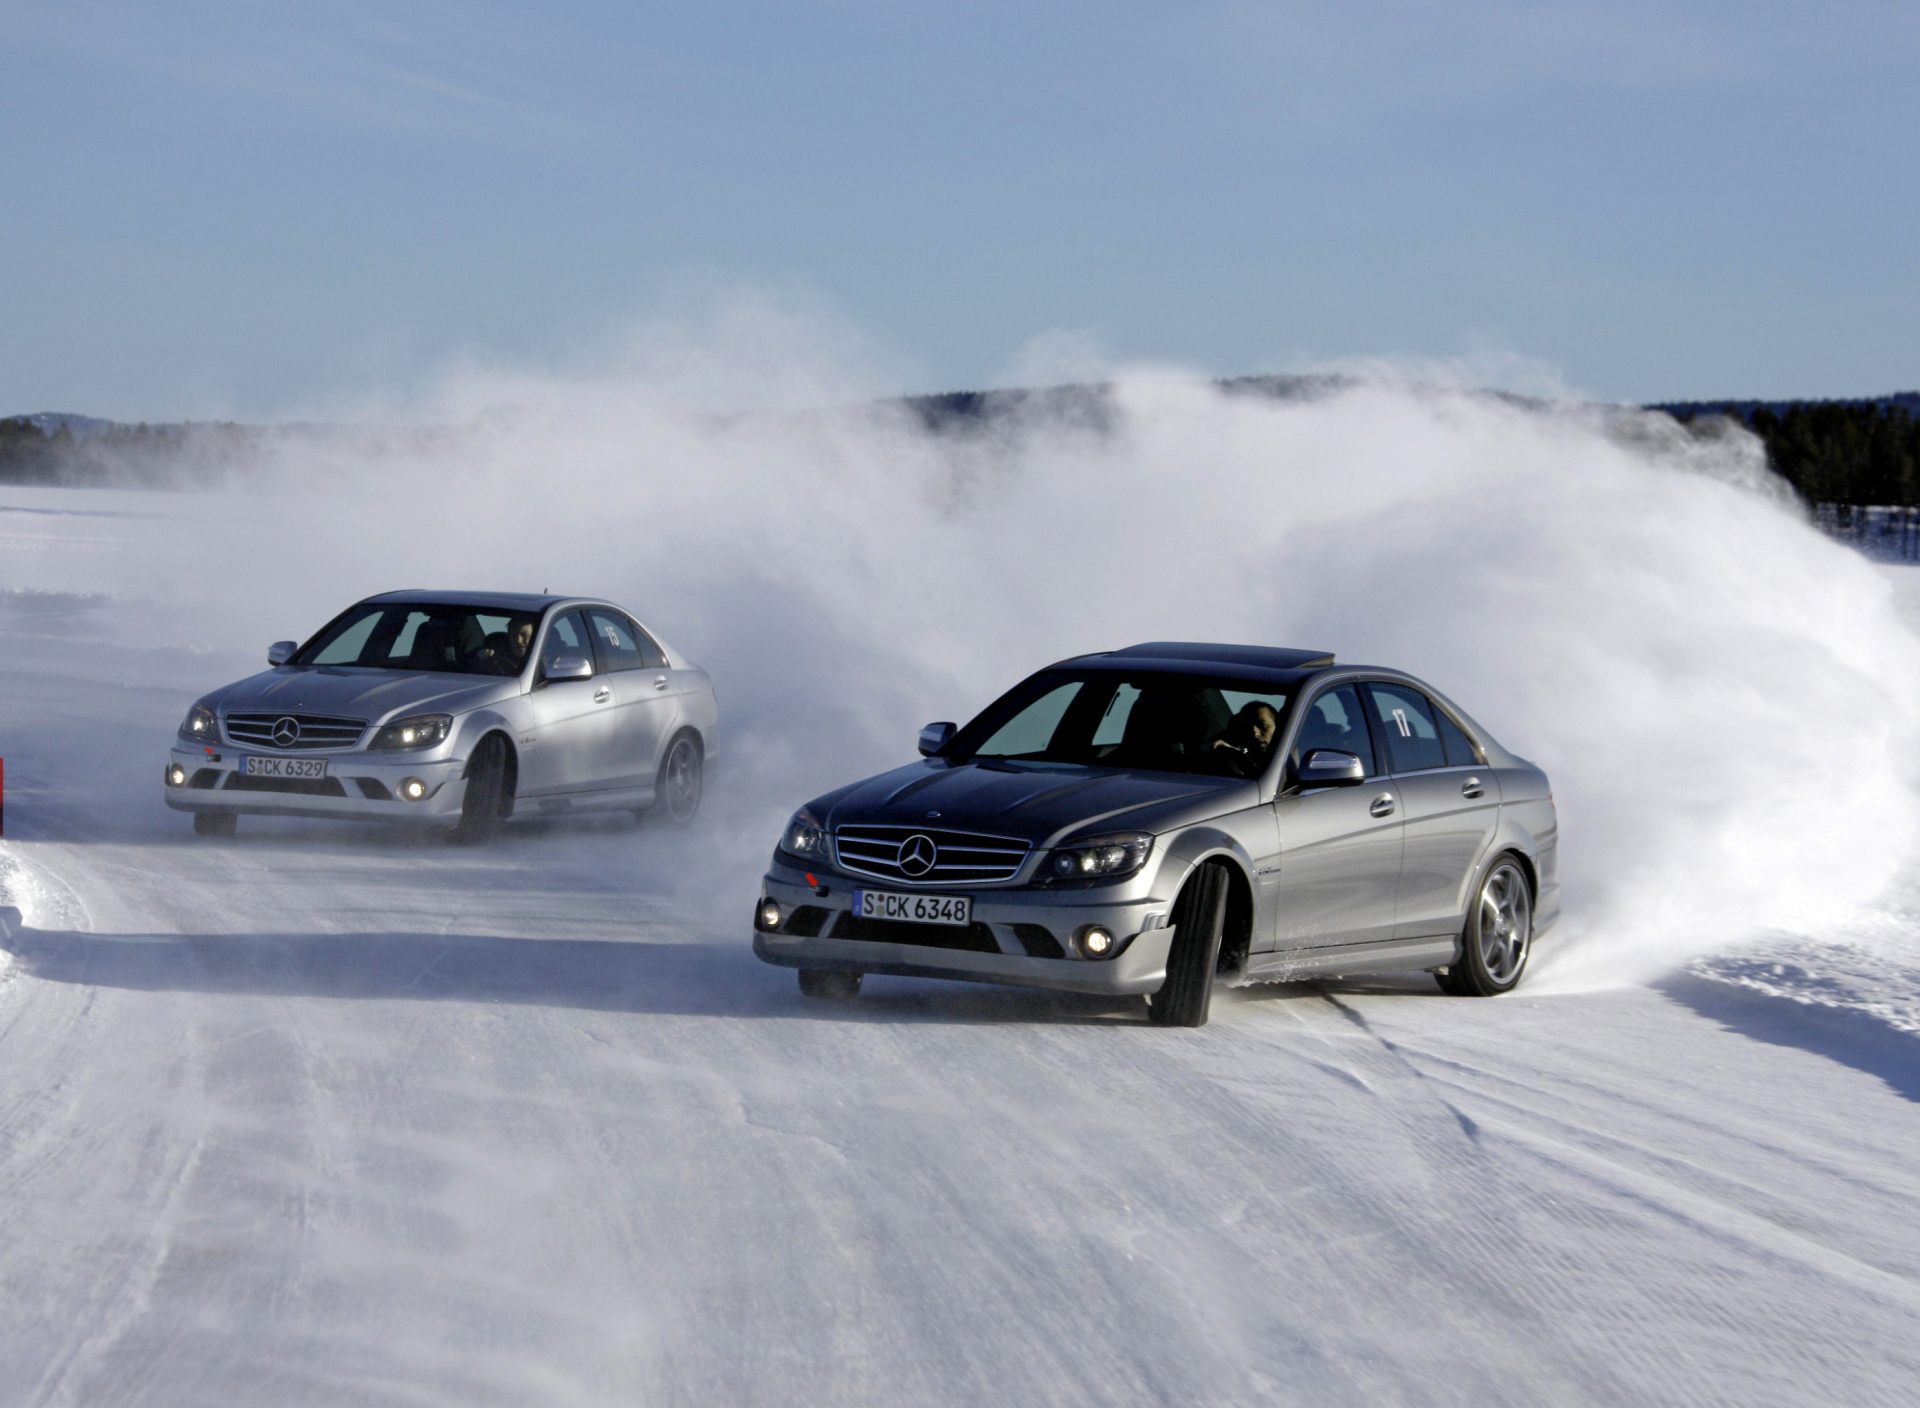 Обои Mercedes Snow Drift 1920x1408